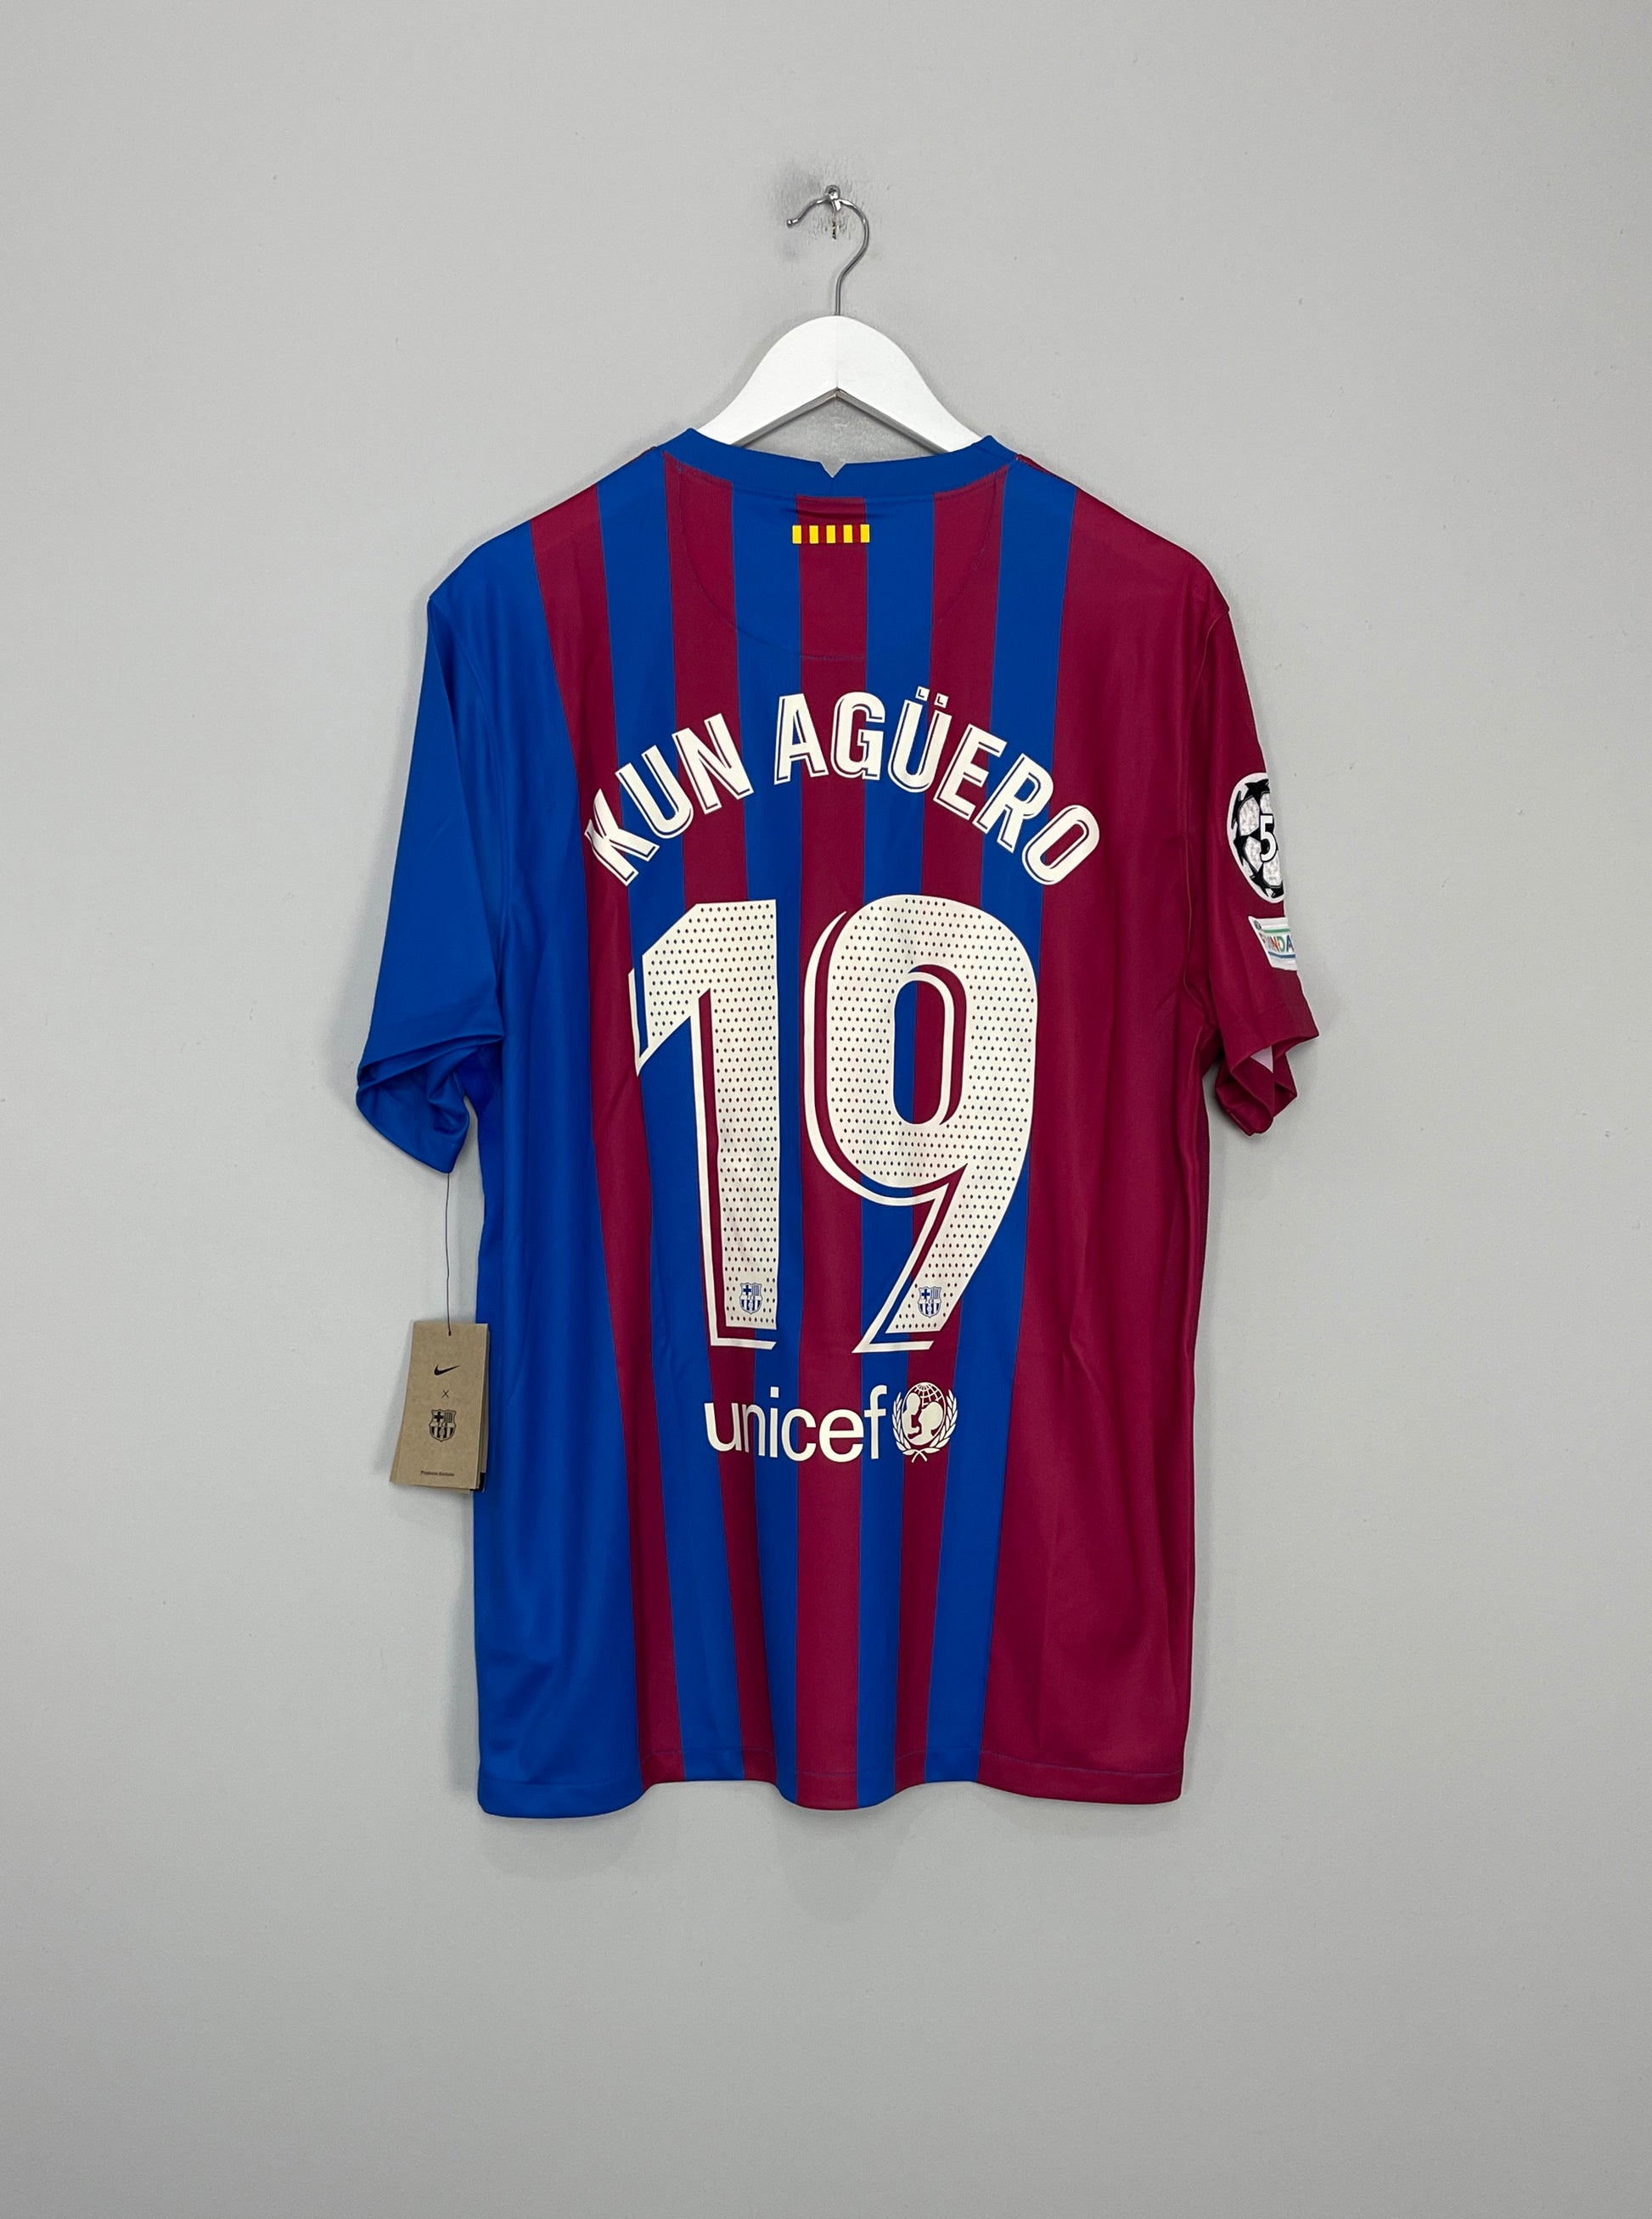 Image of the Barcelona Aguero shirt from the 2021/22 season